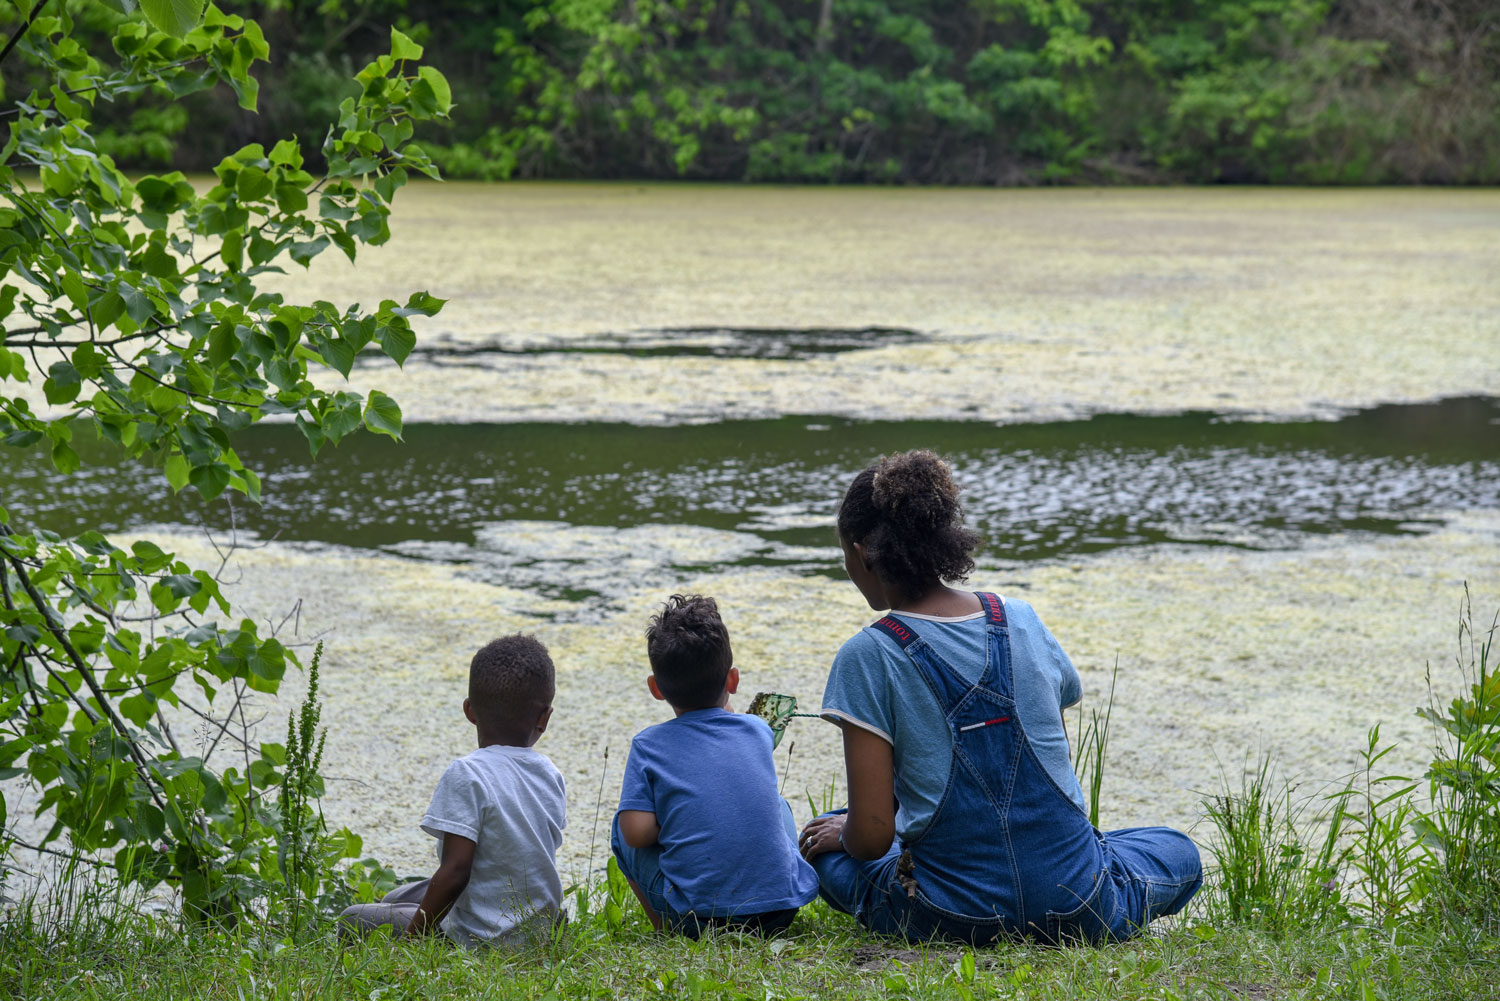 Kids sitting on ground by a pond